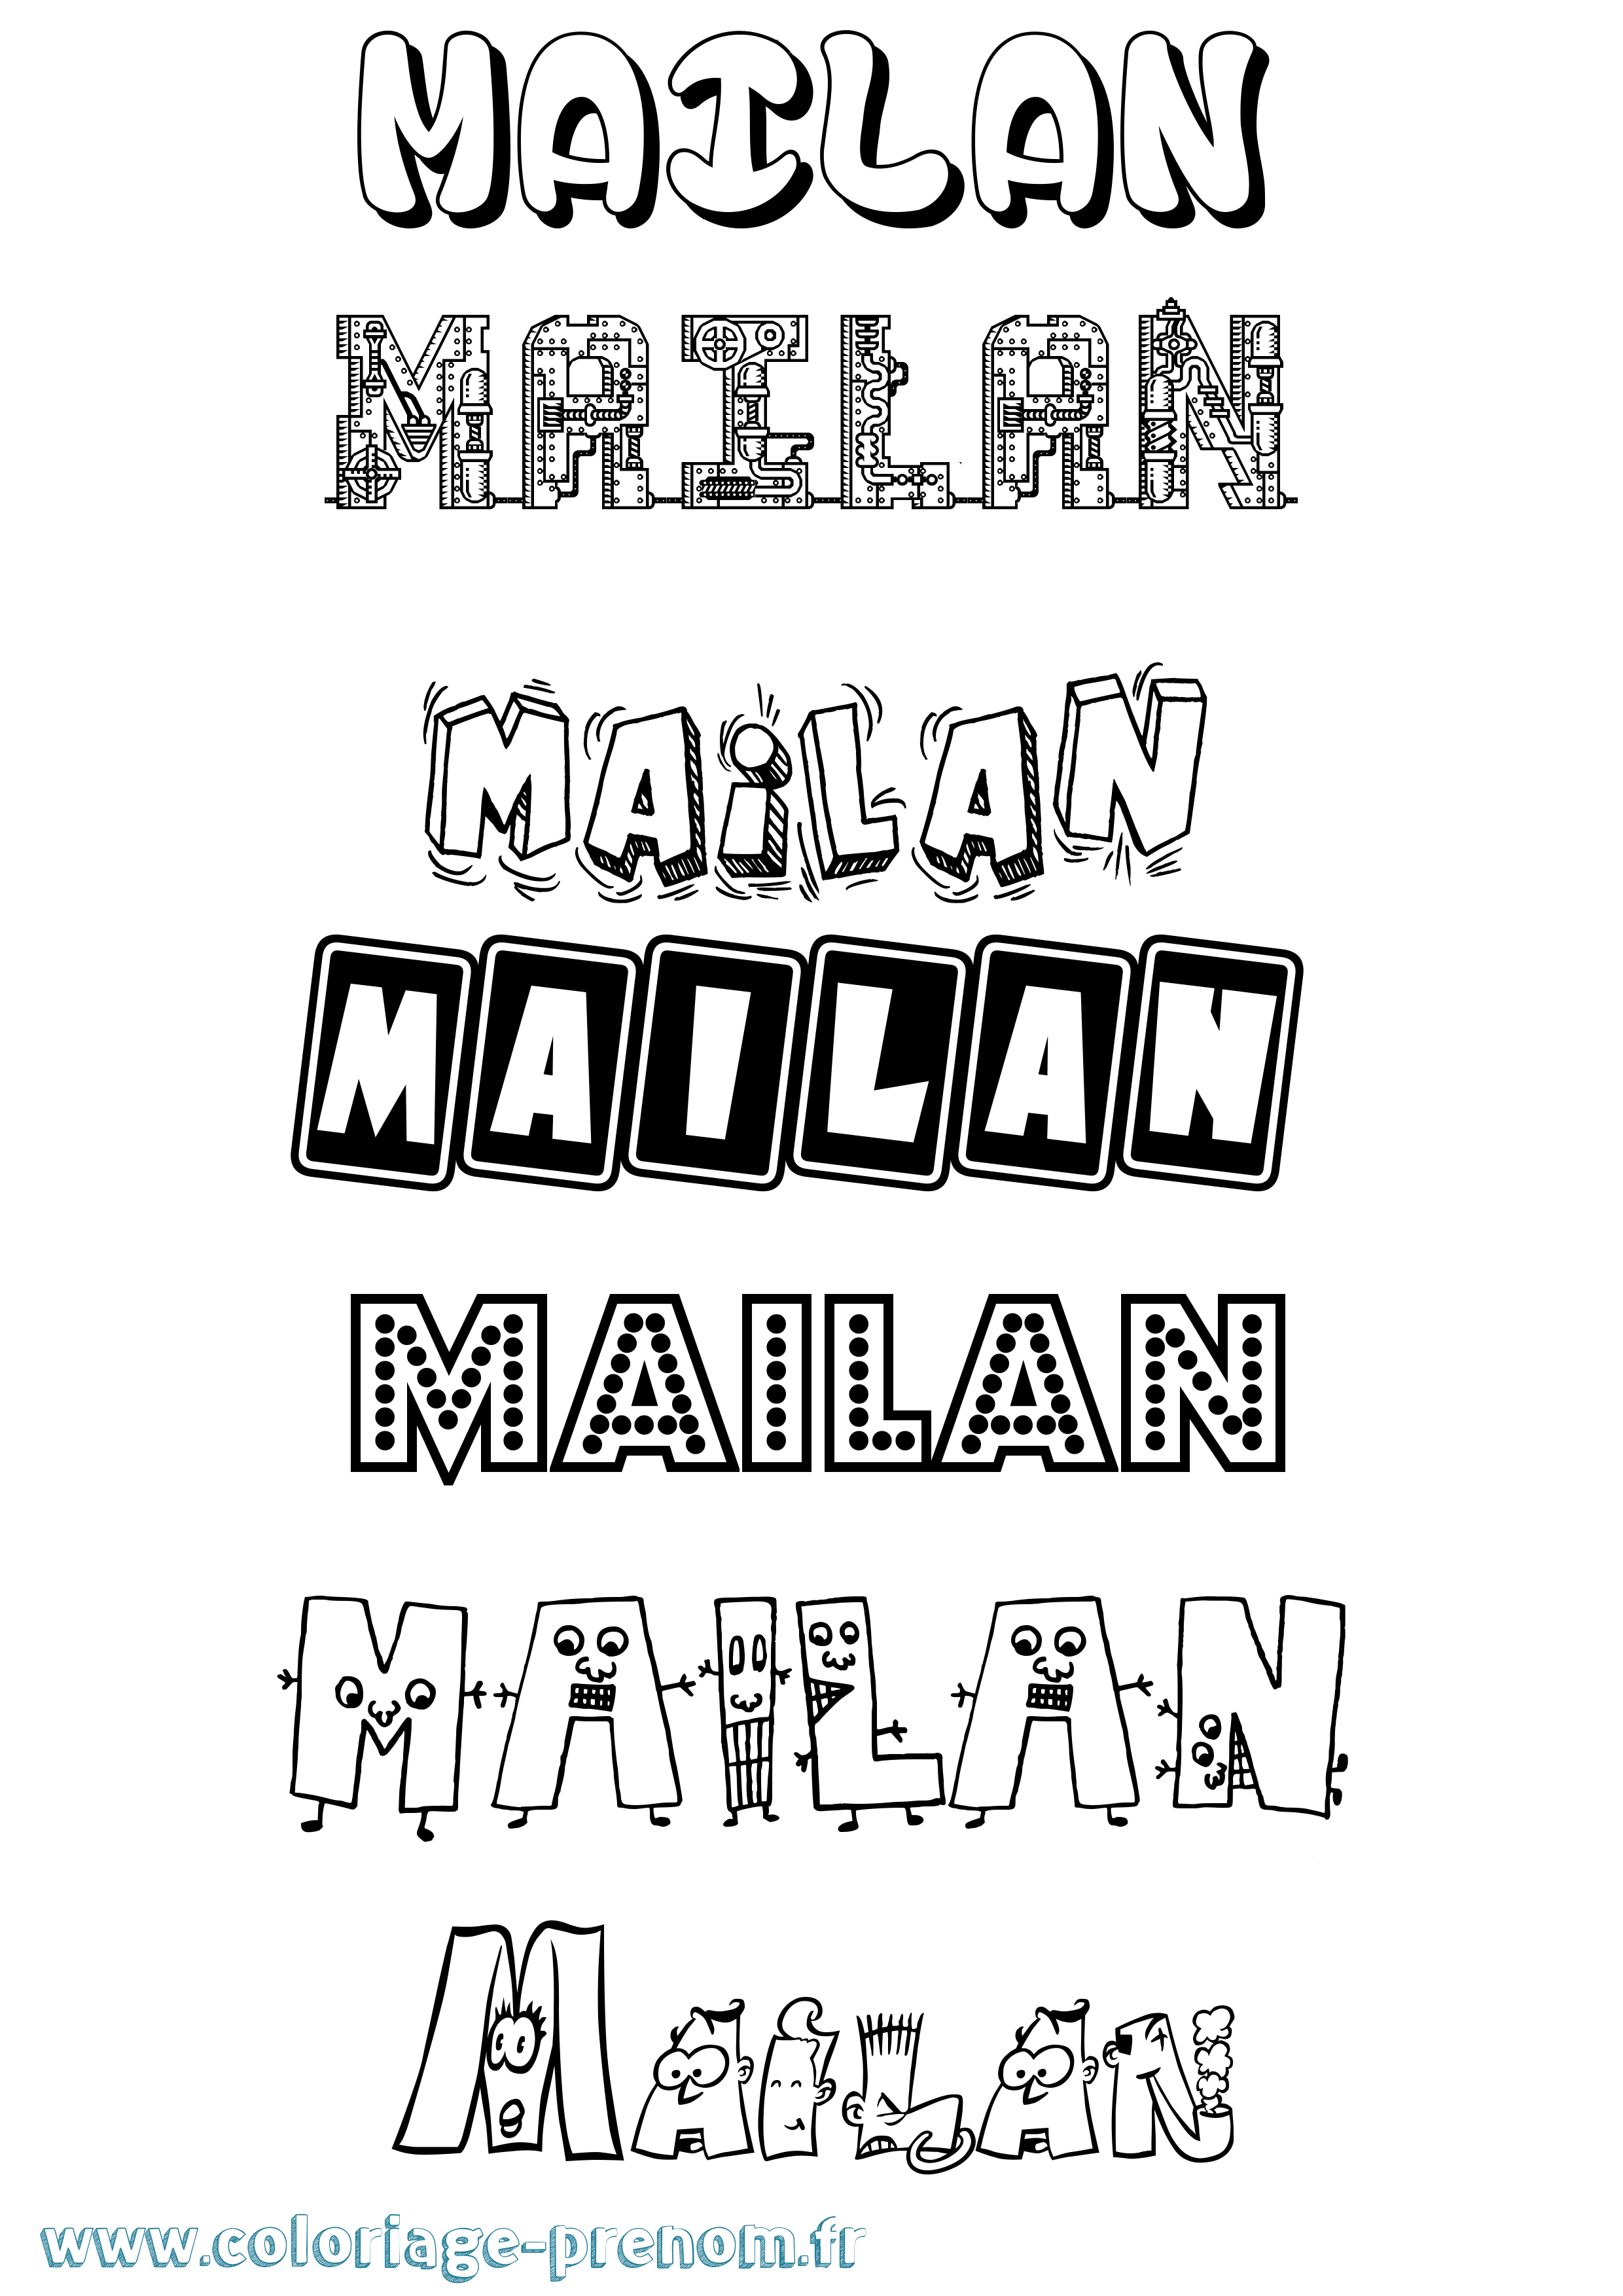 Coloriage prénom Mailan Fun